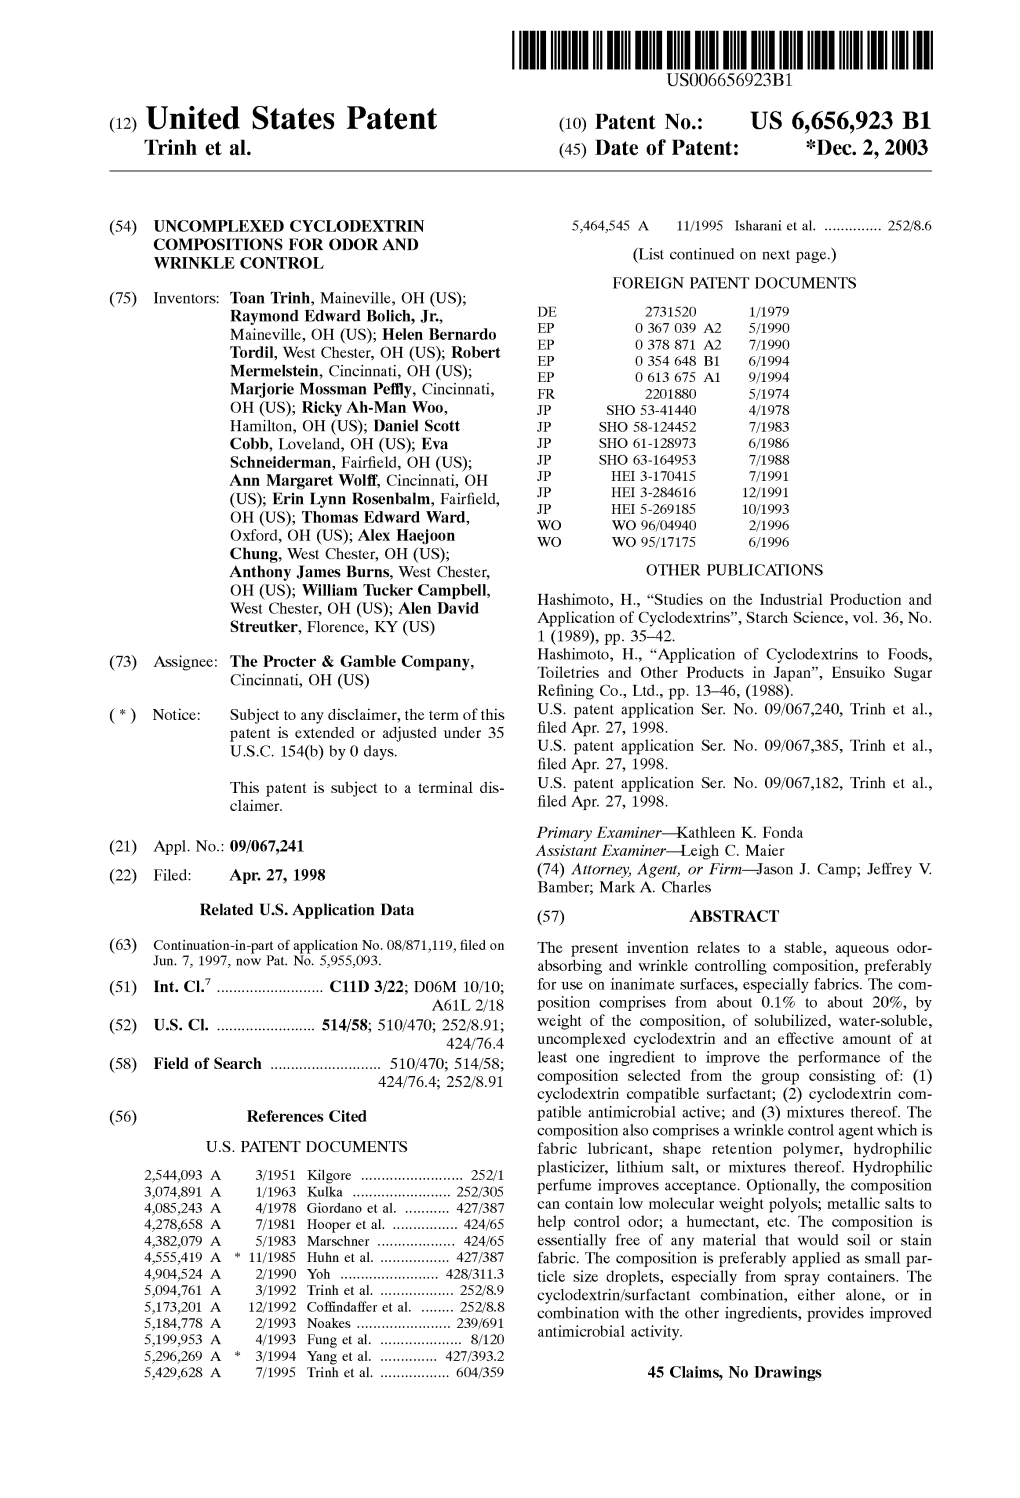 (12) United States Patent (10) Patent No.: US 6,656,923 B1 Trinh Et Al